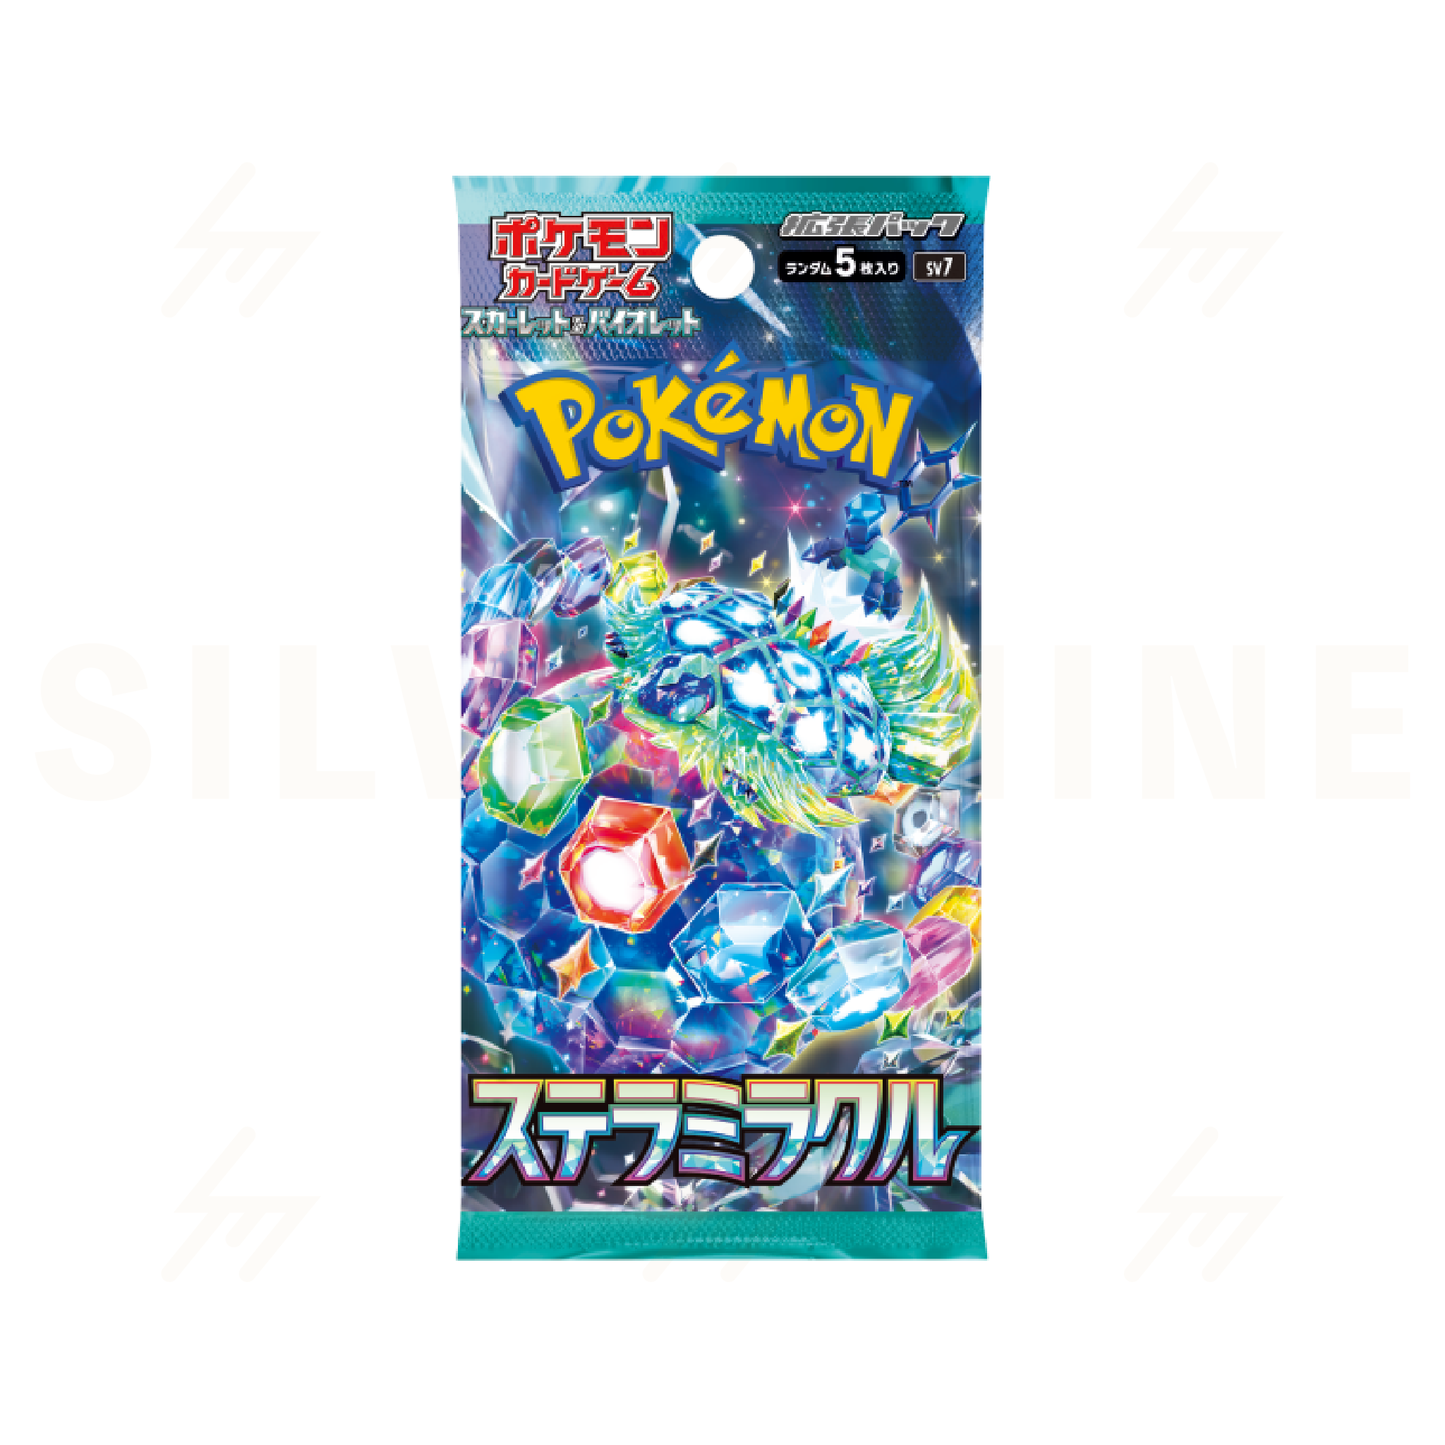 PRE-ORDER: sv7 - Pokemon TCG - Booster Box - Scarlet & Violet - Expansion Pack Stella Miracle